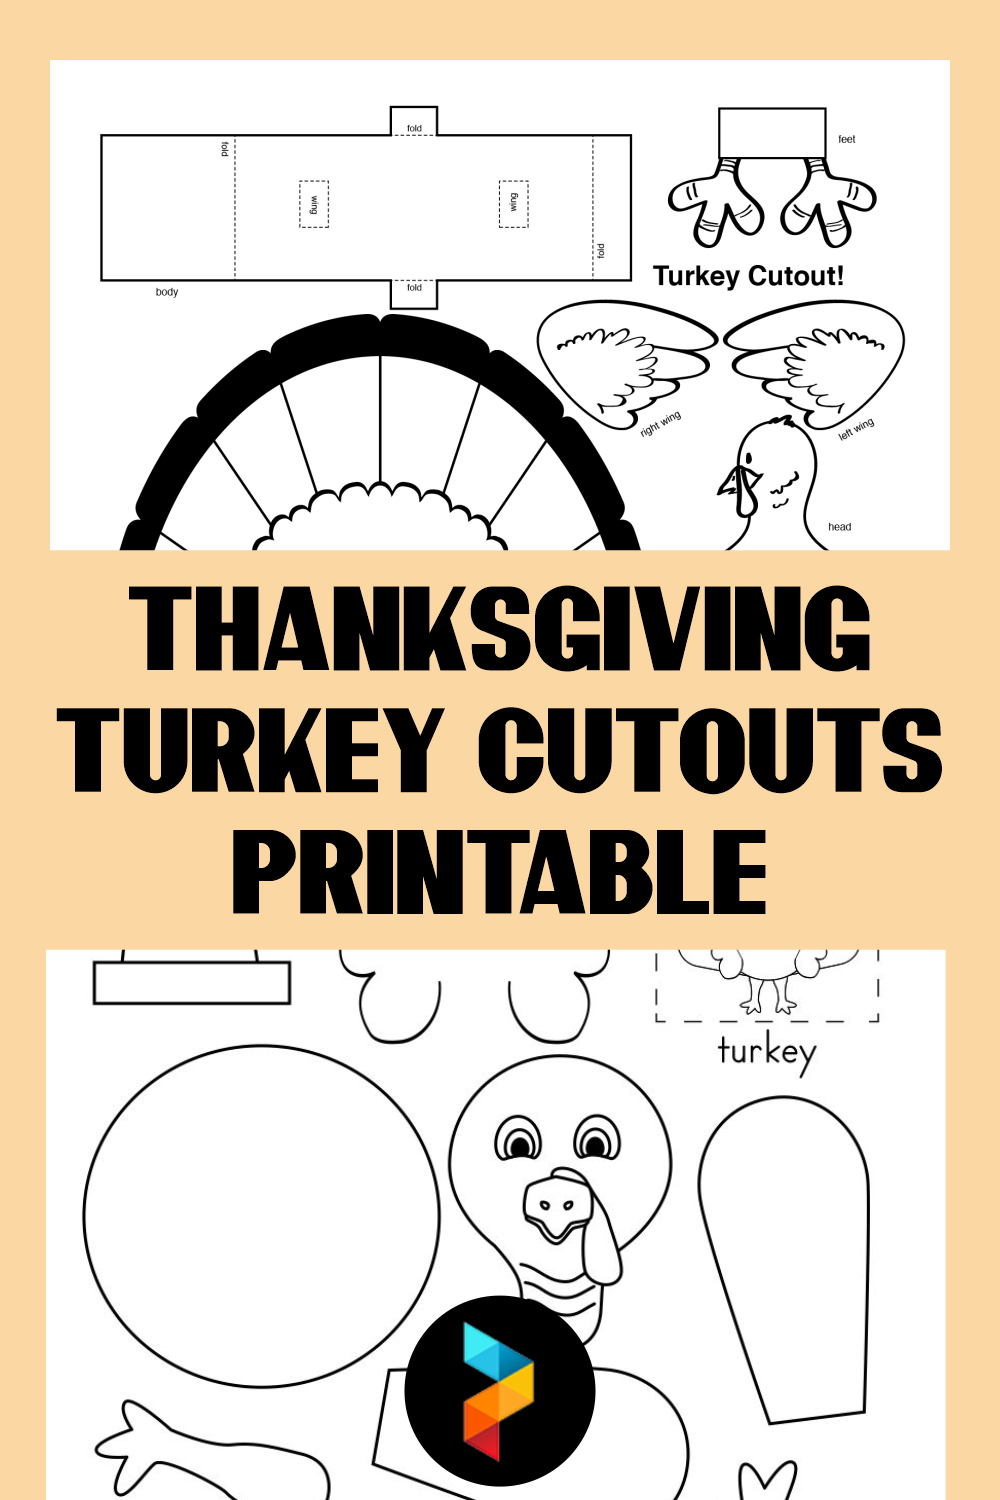 Thanksgiving Turkey Cutouts Printable